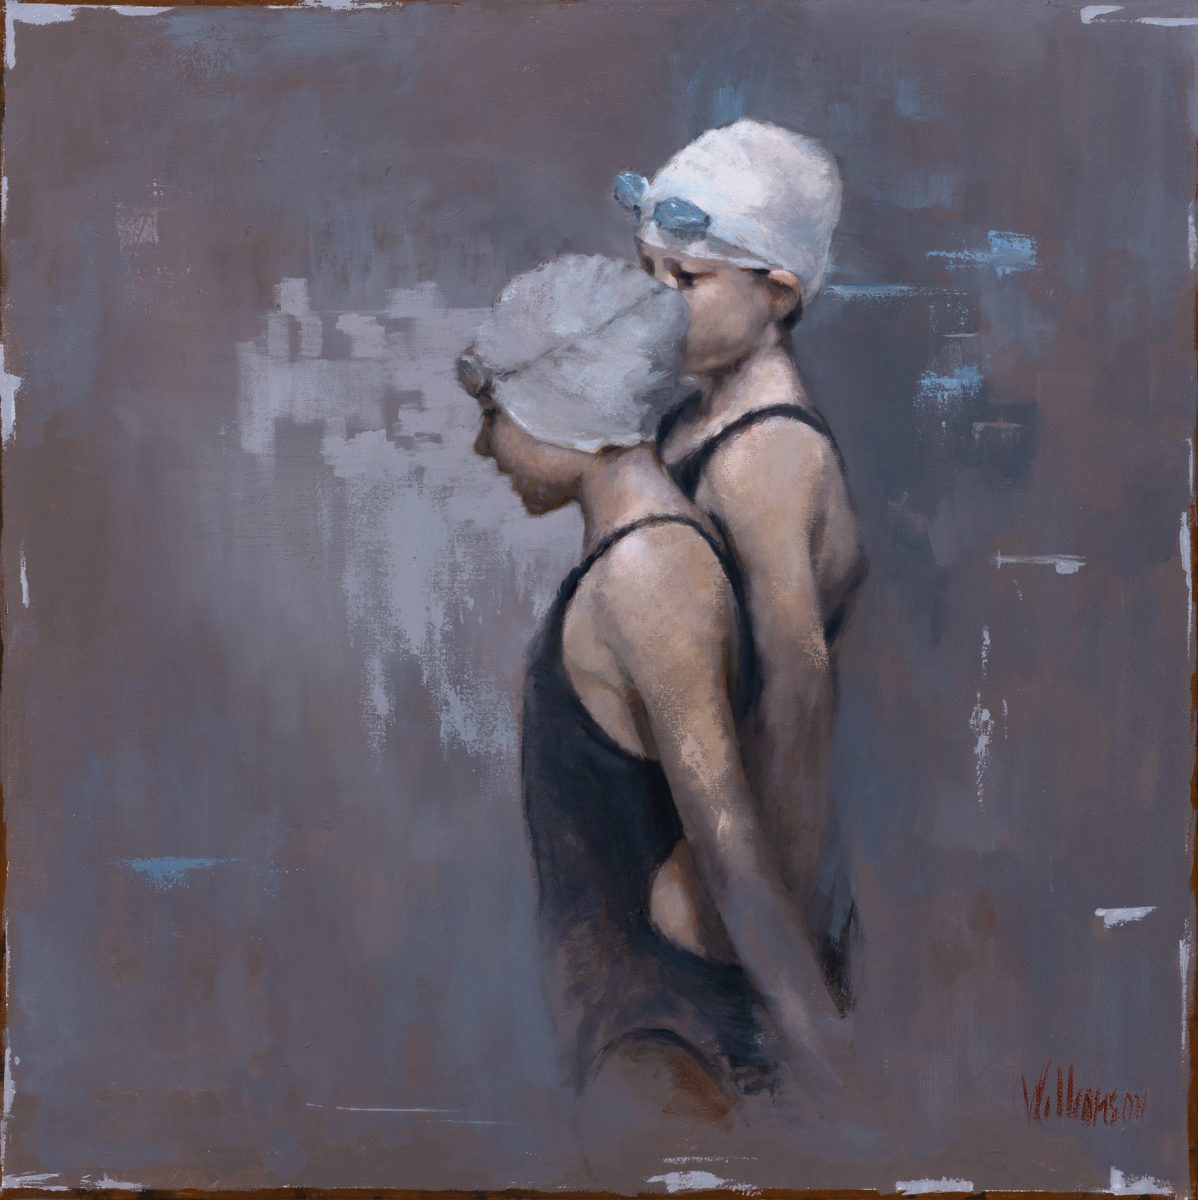 Untitled | Jan Williamson | Oil on canvas | 76 x 76 cm | $8,000